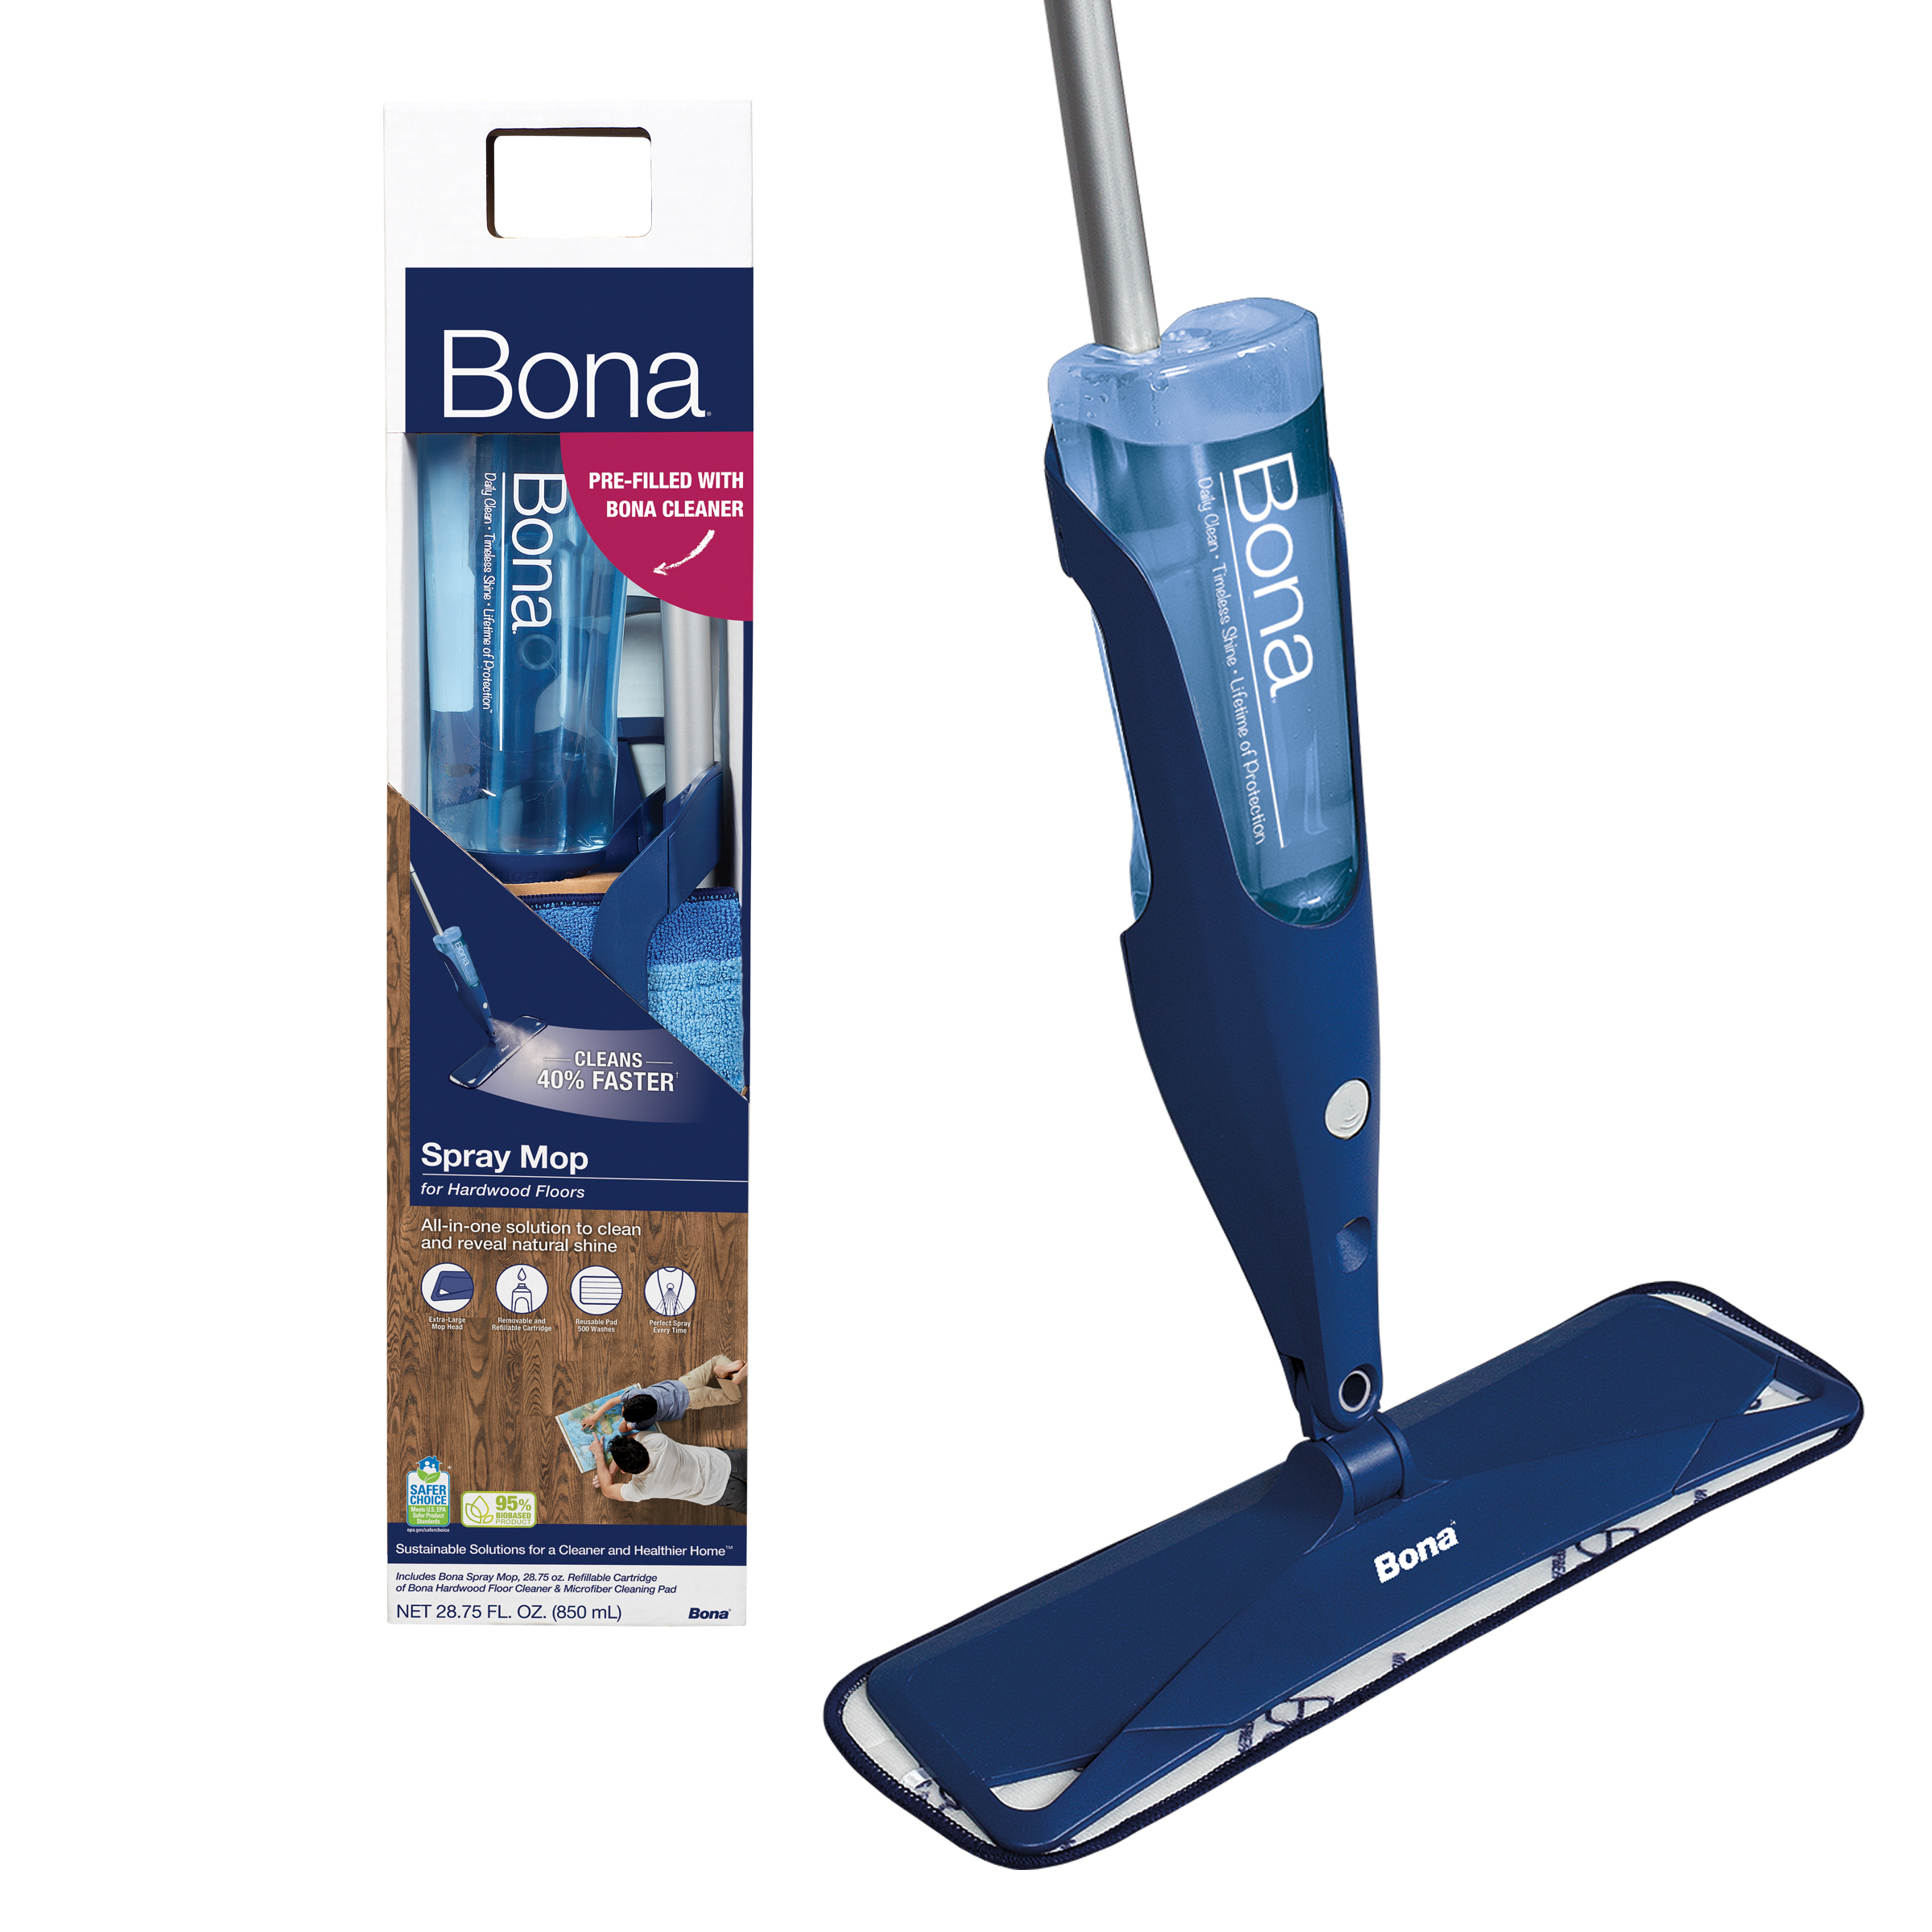 Bona Spray Mop for Hardwood Floors, with Refillable Cartridge & Washable Microfiber Pad - image 1 of 7